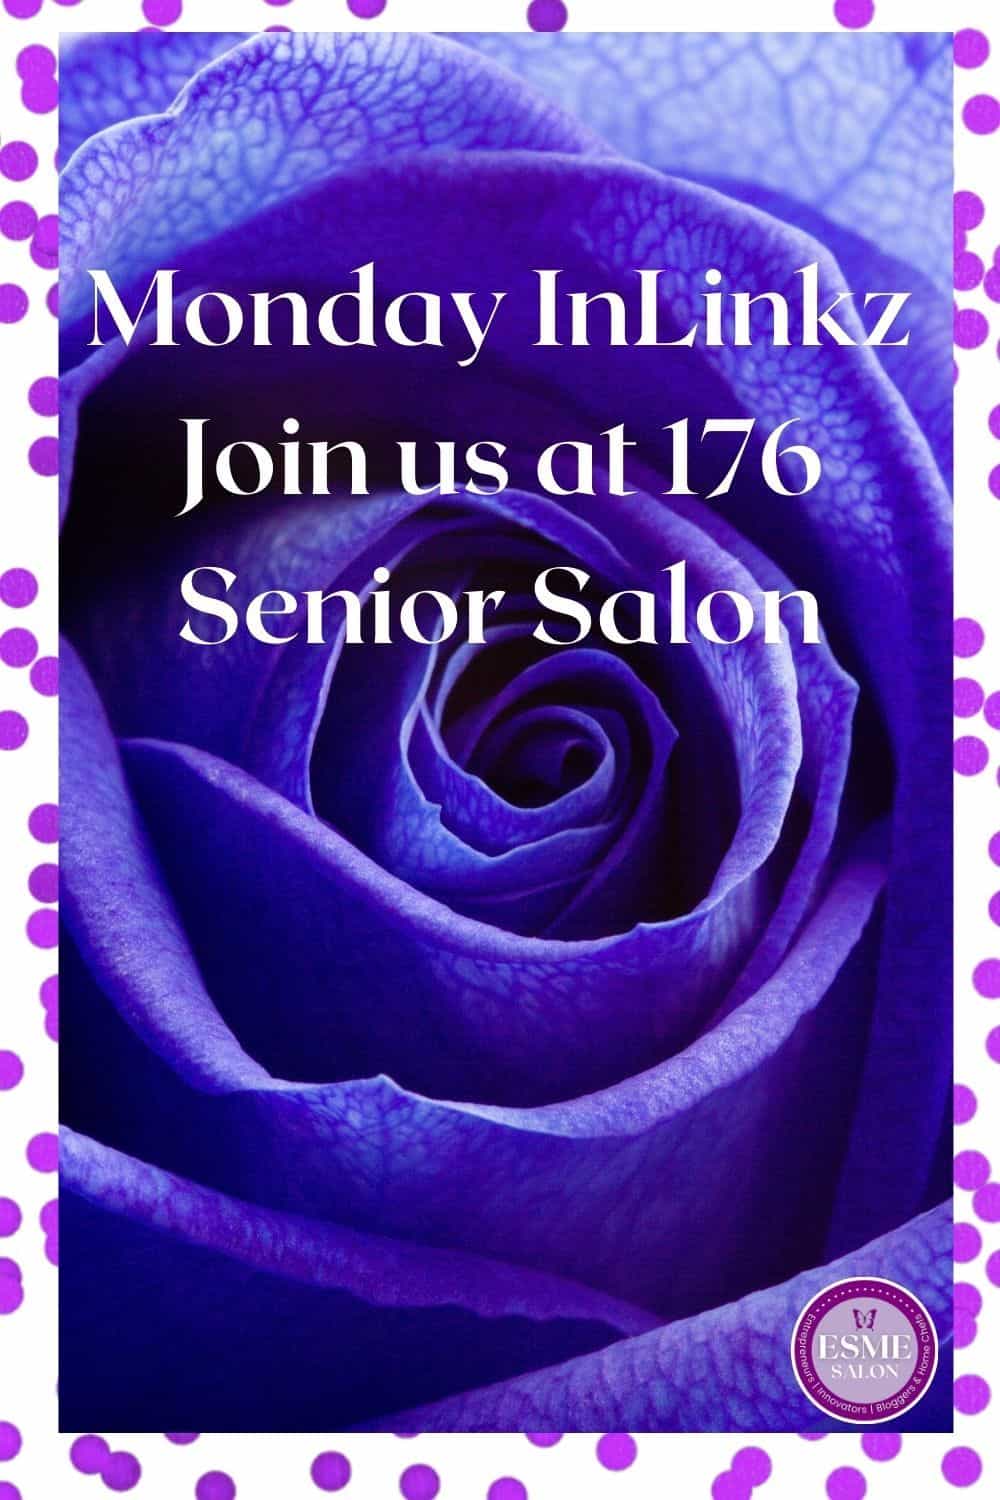 Blue Purple rose with invite to Inlinkz Senior Salon linkup